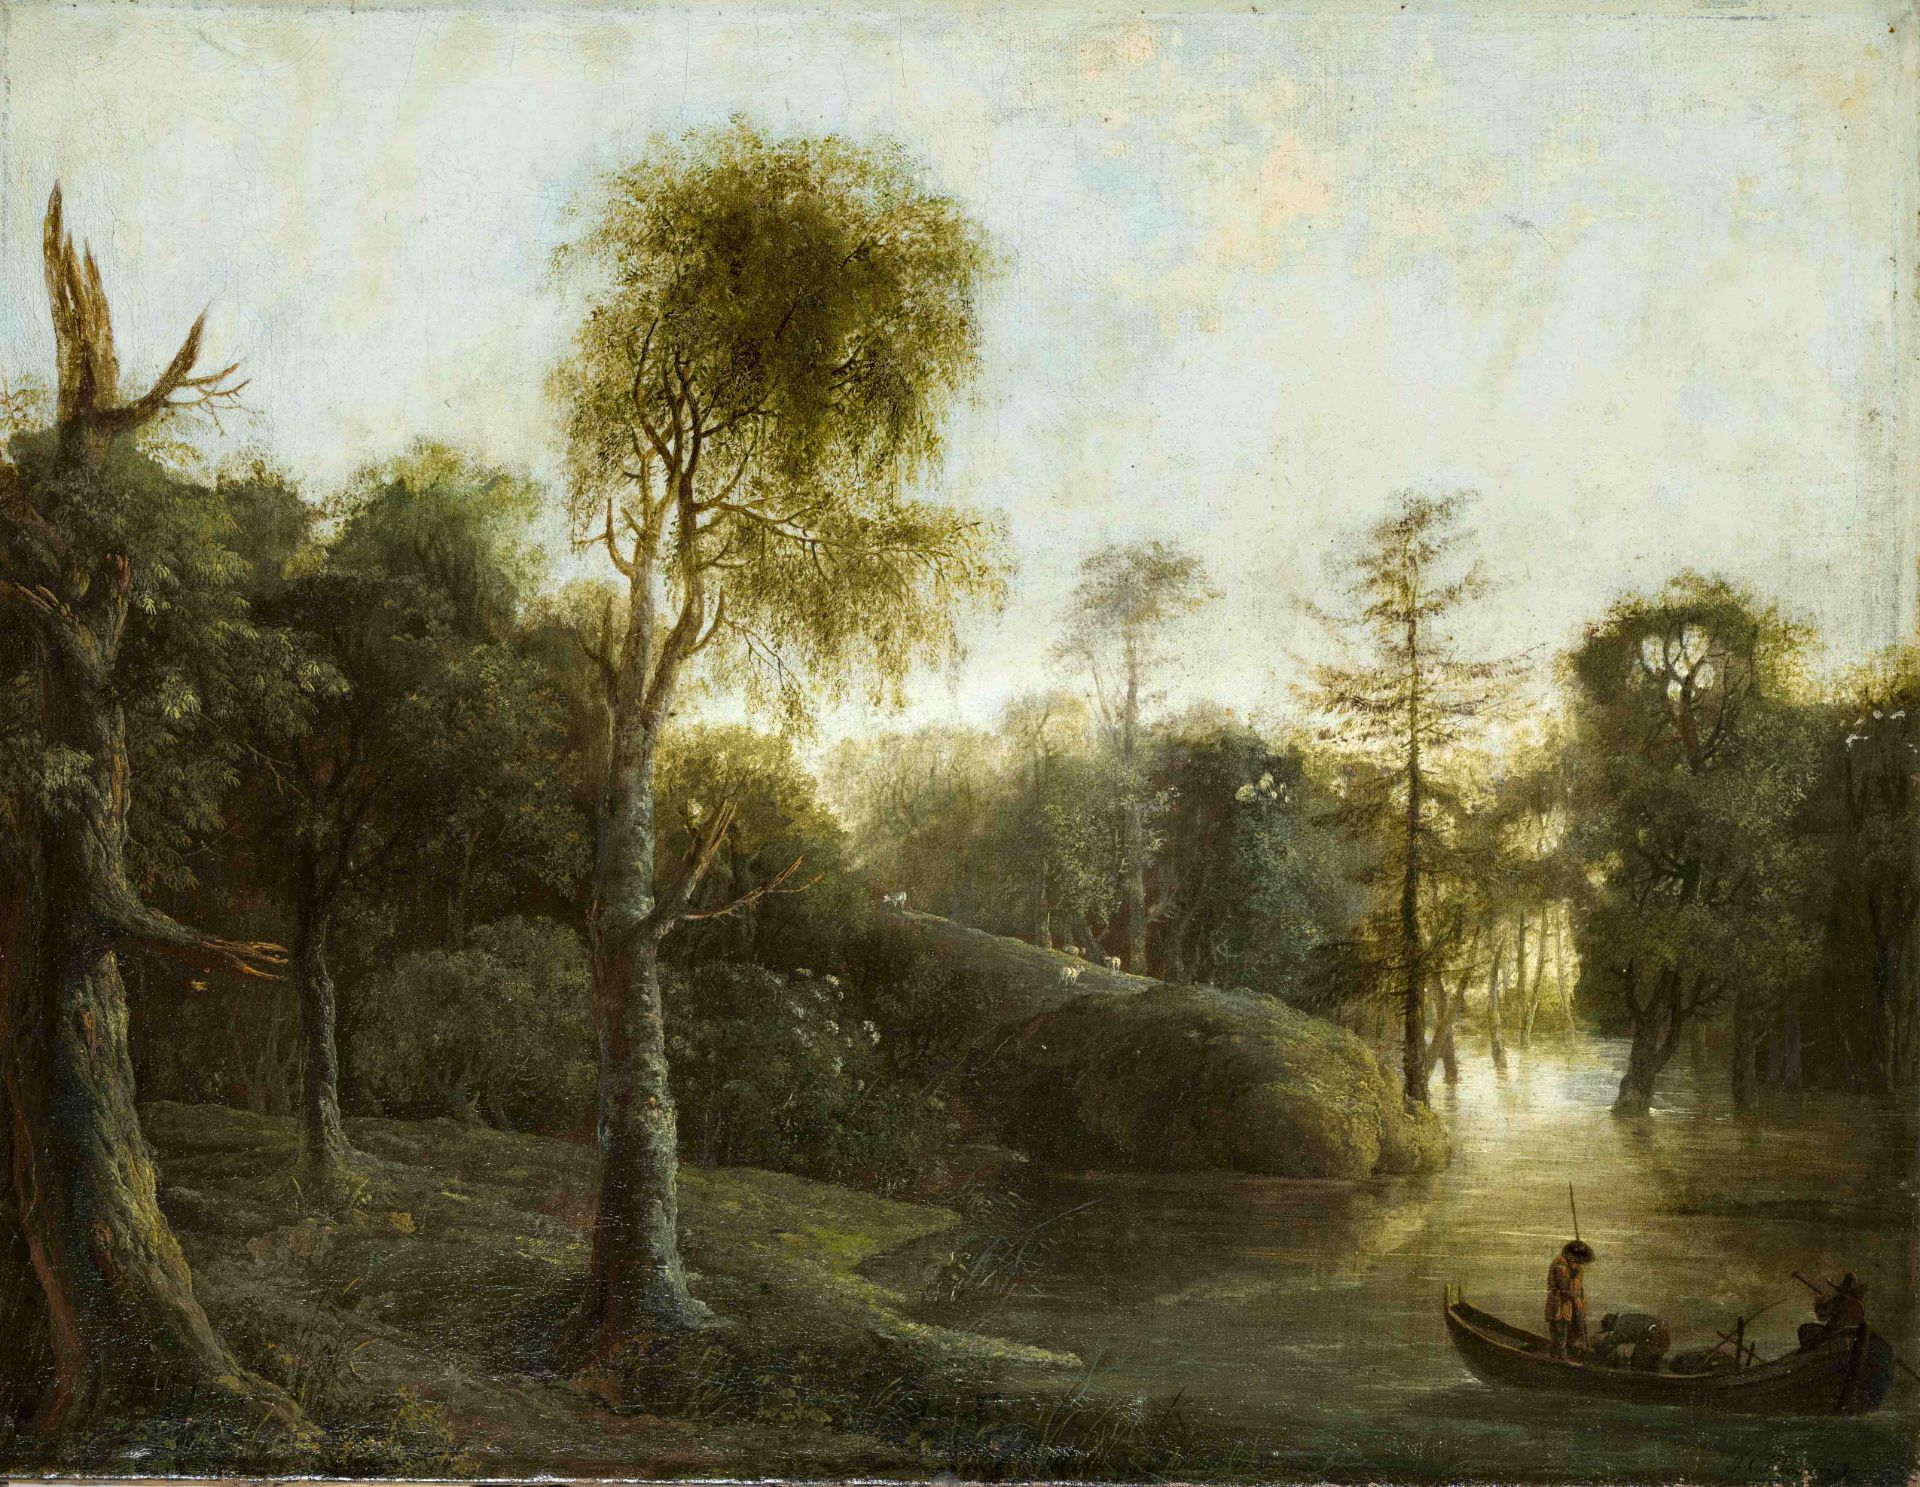 Friedrich Christian Klass (1752-1827), Dresden painter, Romantic river landscape with fishermen in